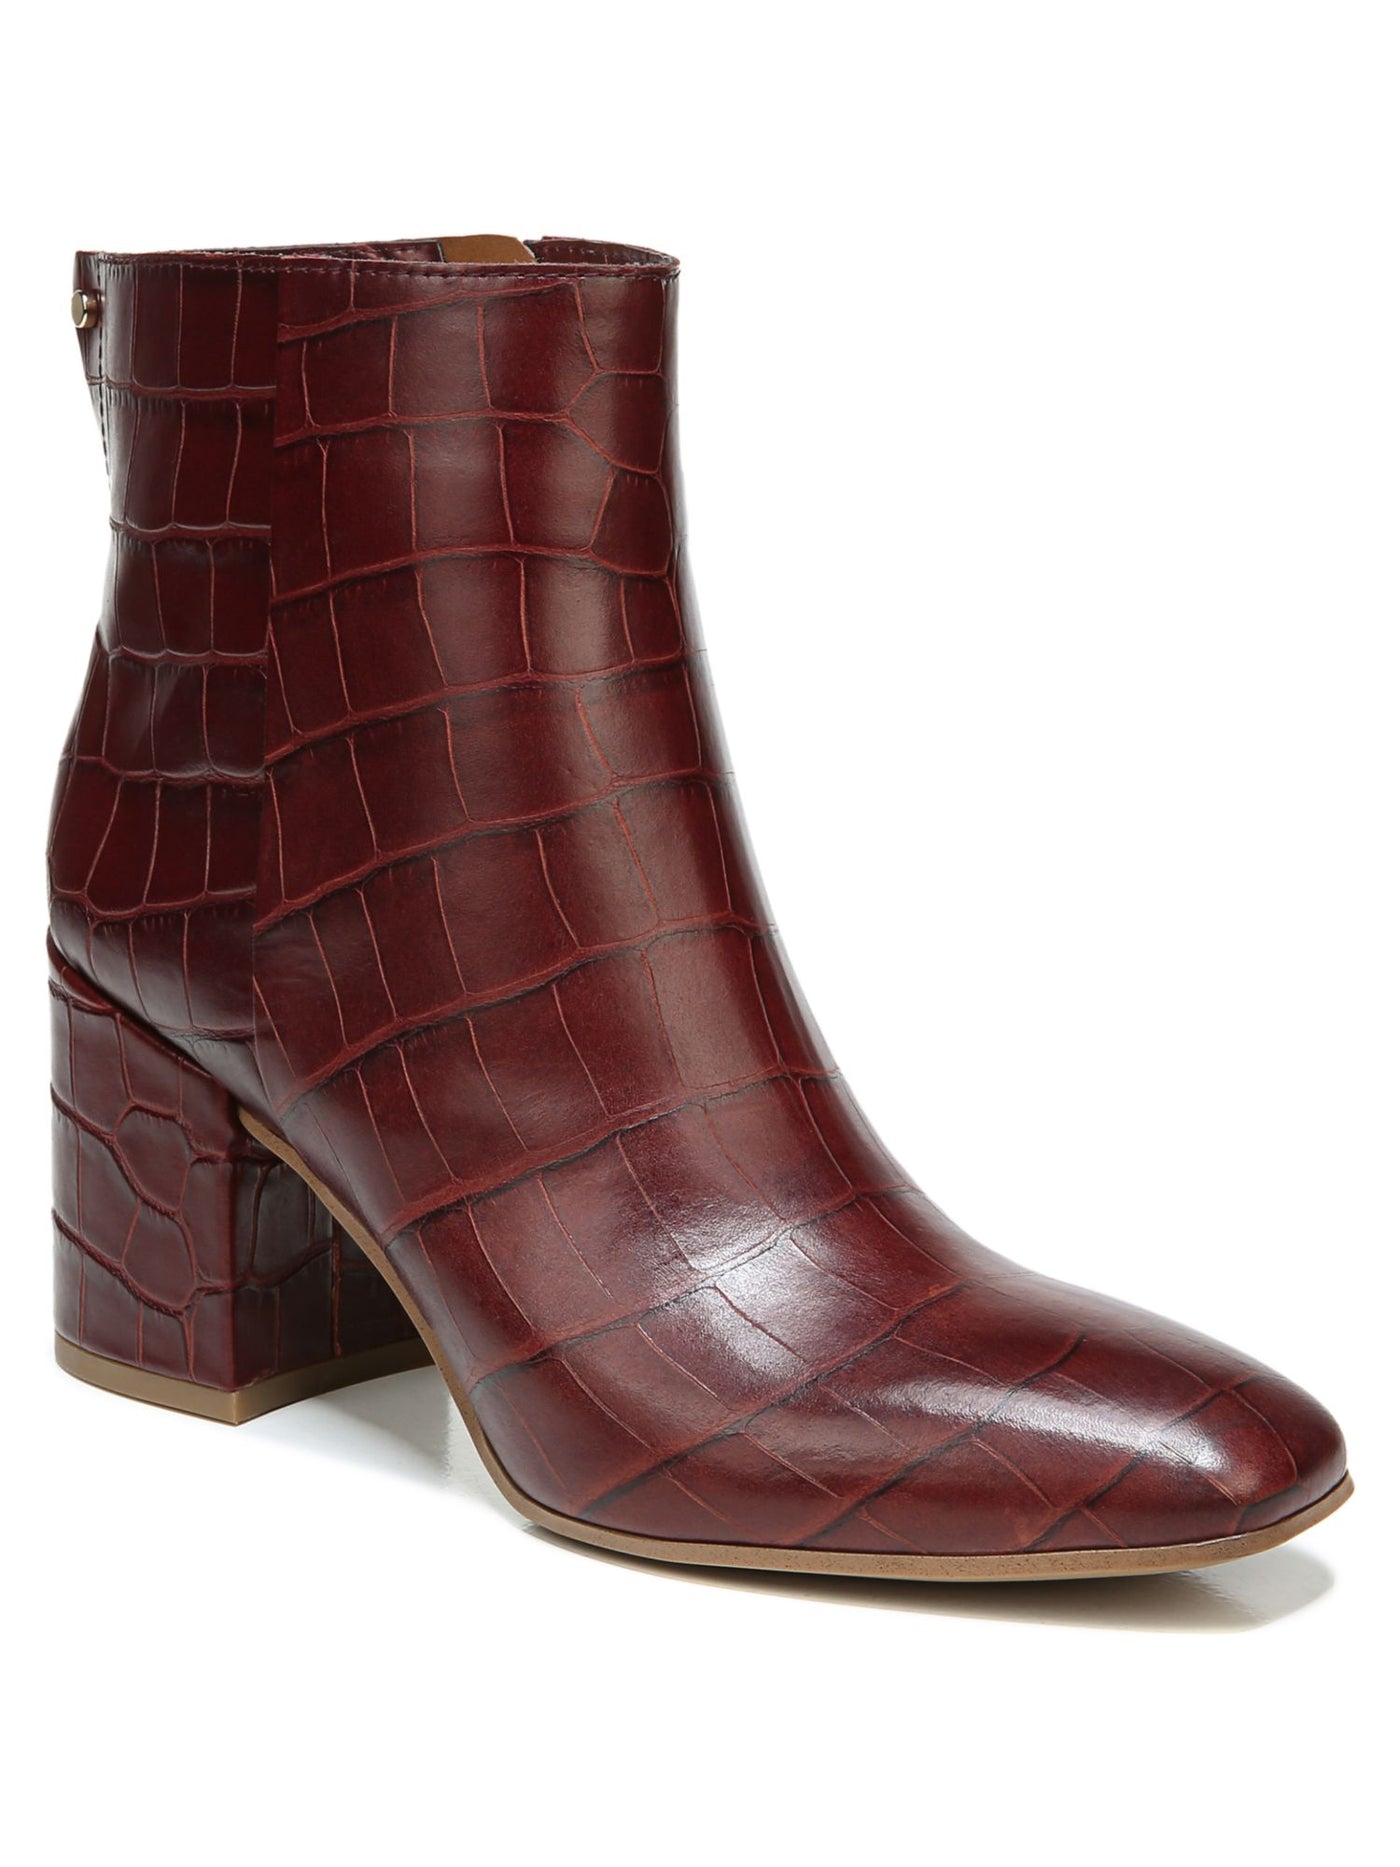 FRANCO SARTO Womens Maroon Crocodile Padded Studded Tina Square Toe Block Heel Zip-Up Leather Booties 8 M